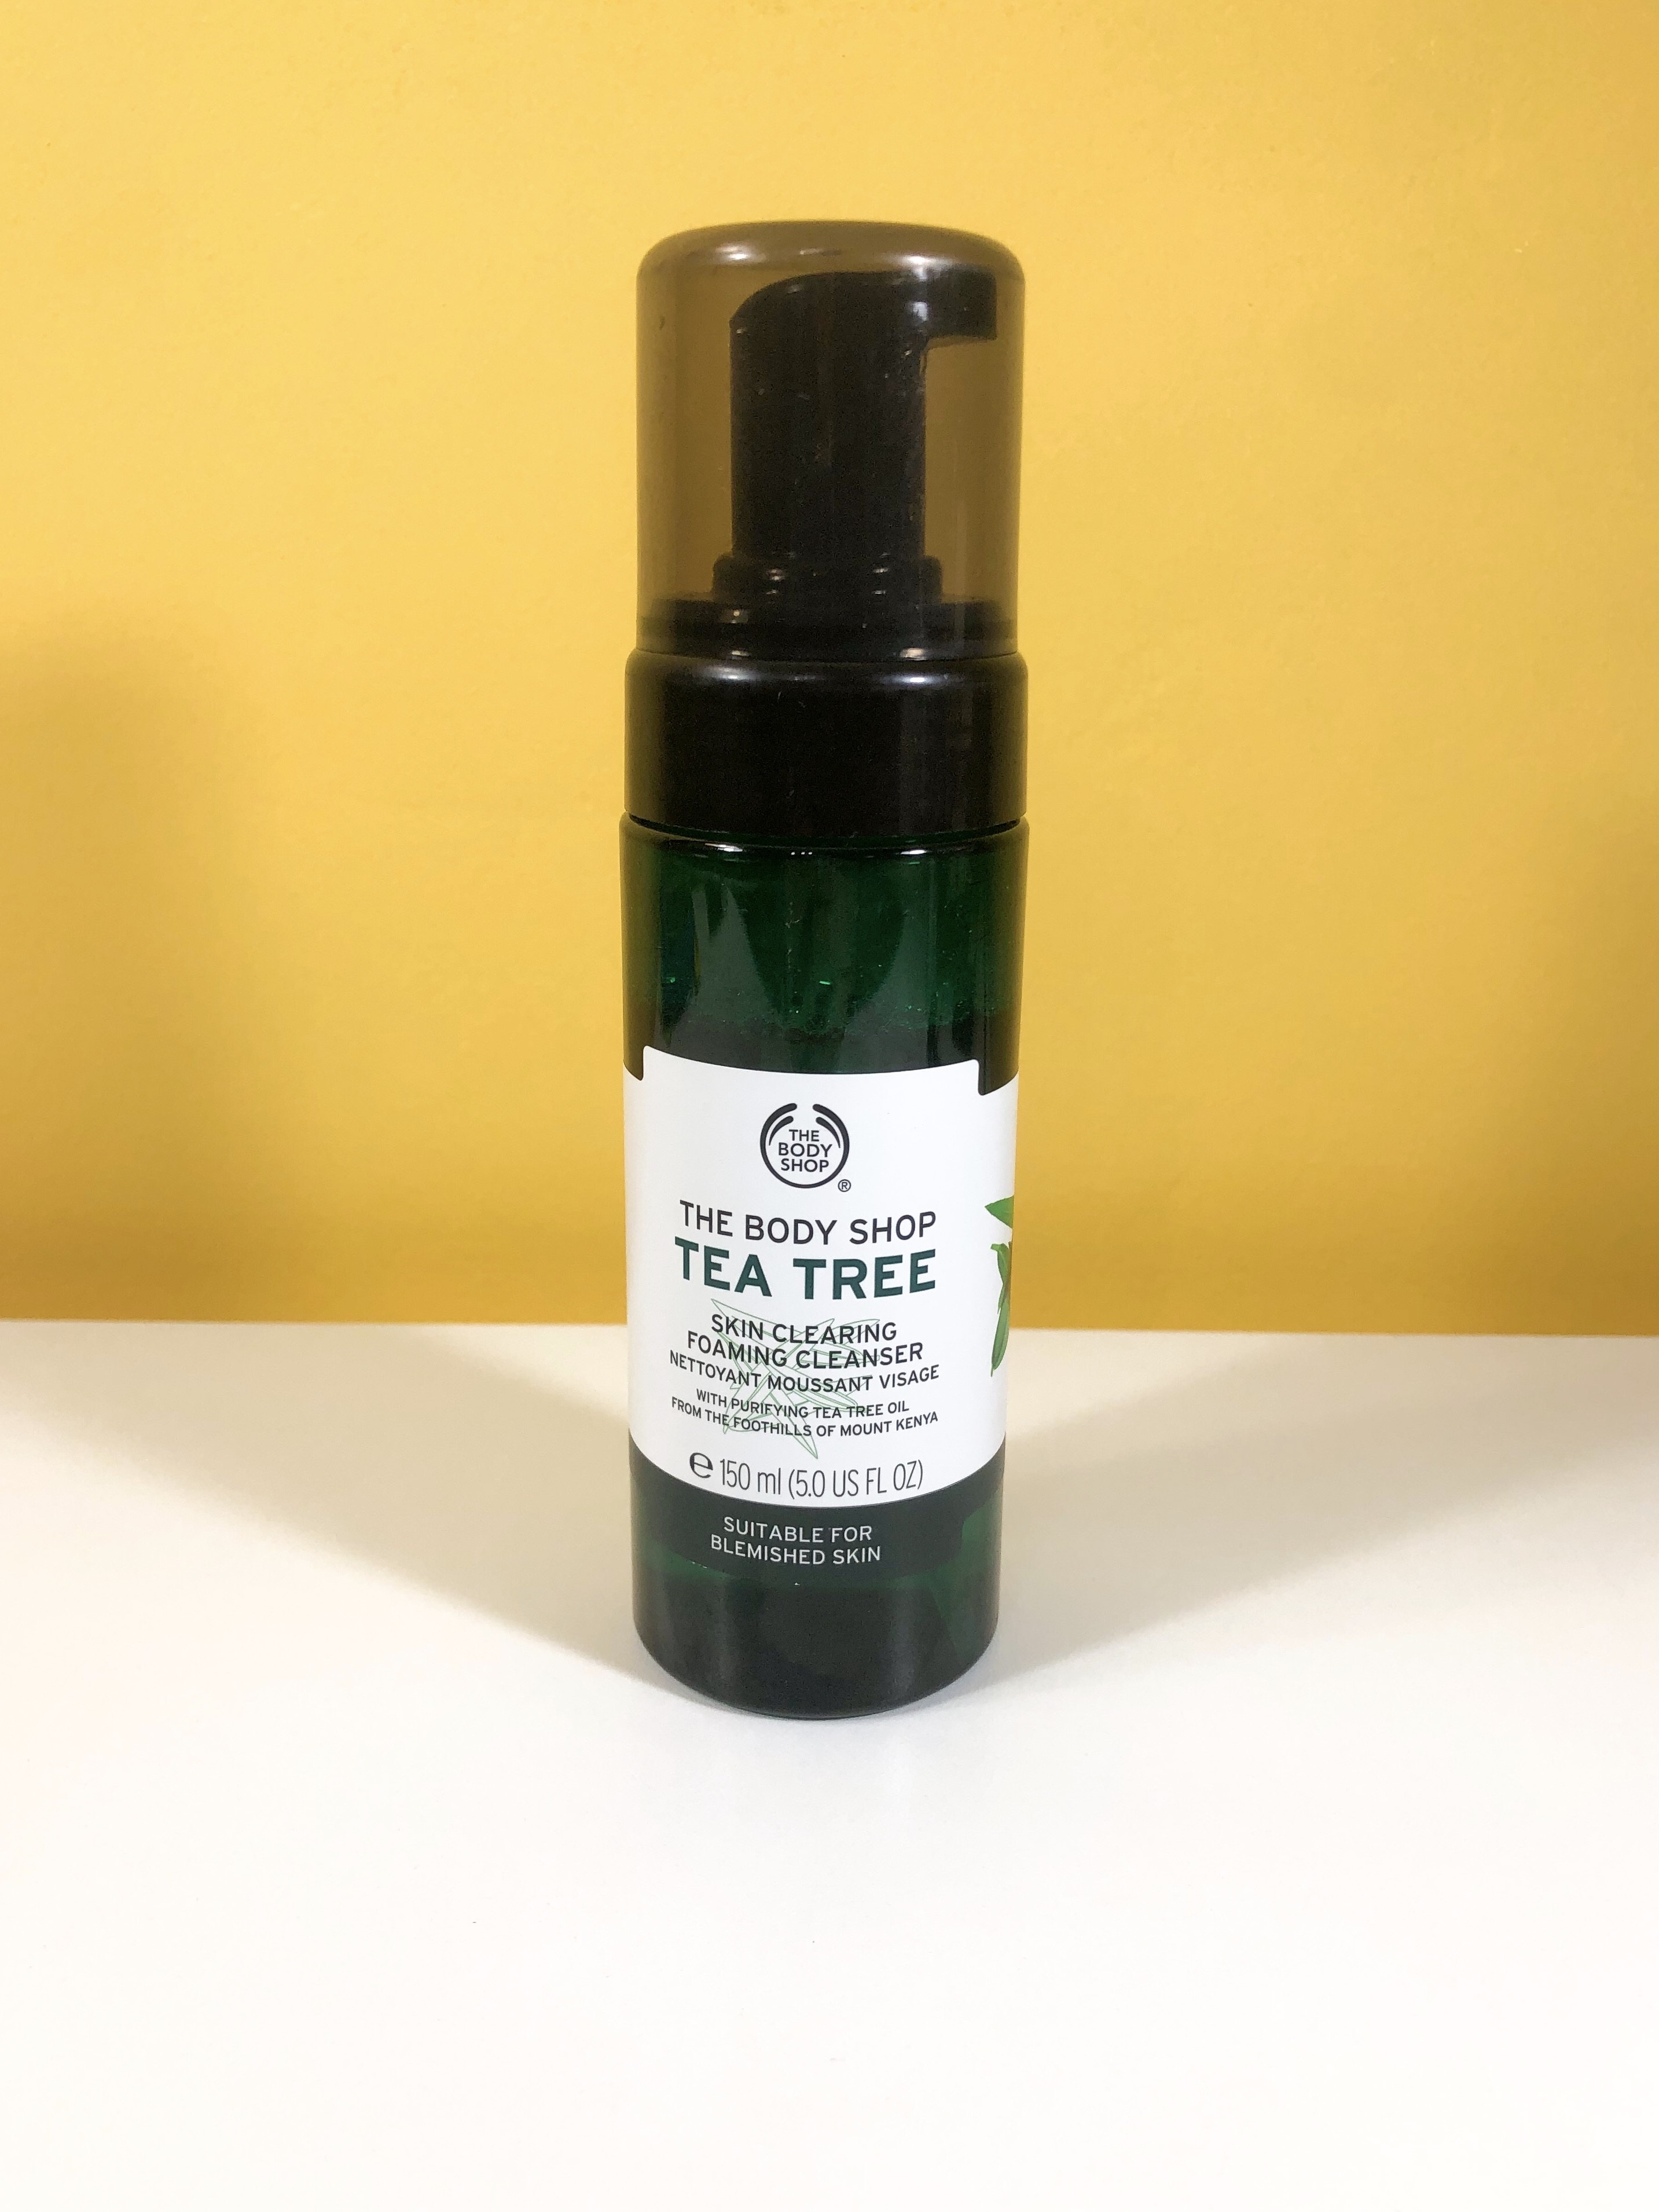 Espuma de Limpeza Tea Tree Skin Clearing,The Body Shop  (Foto: acervo pessoal)